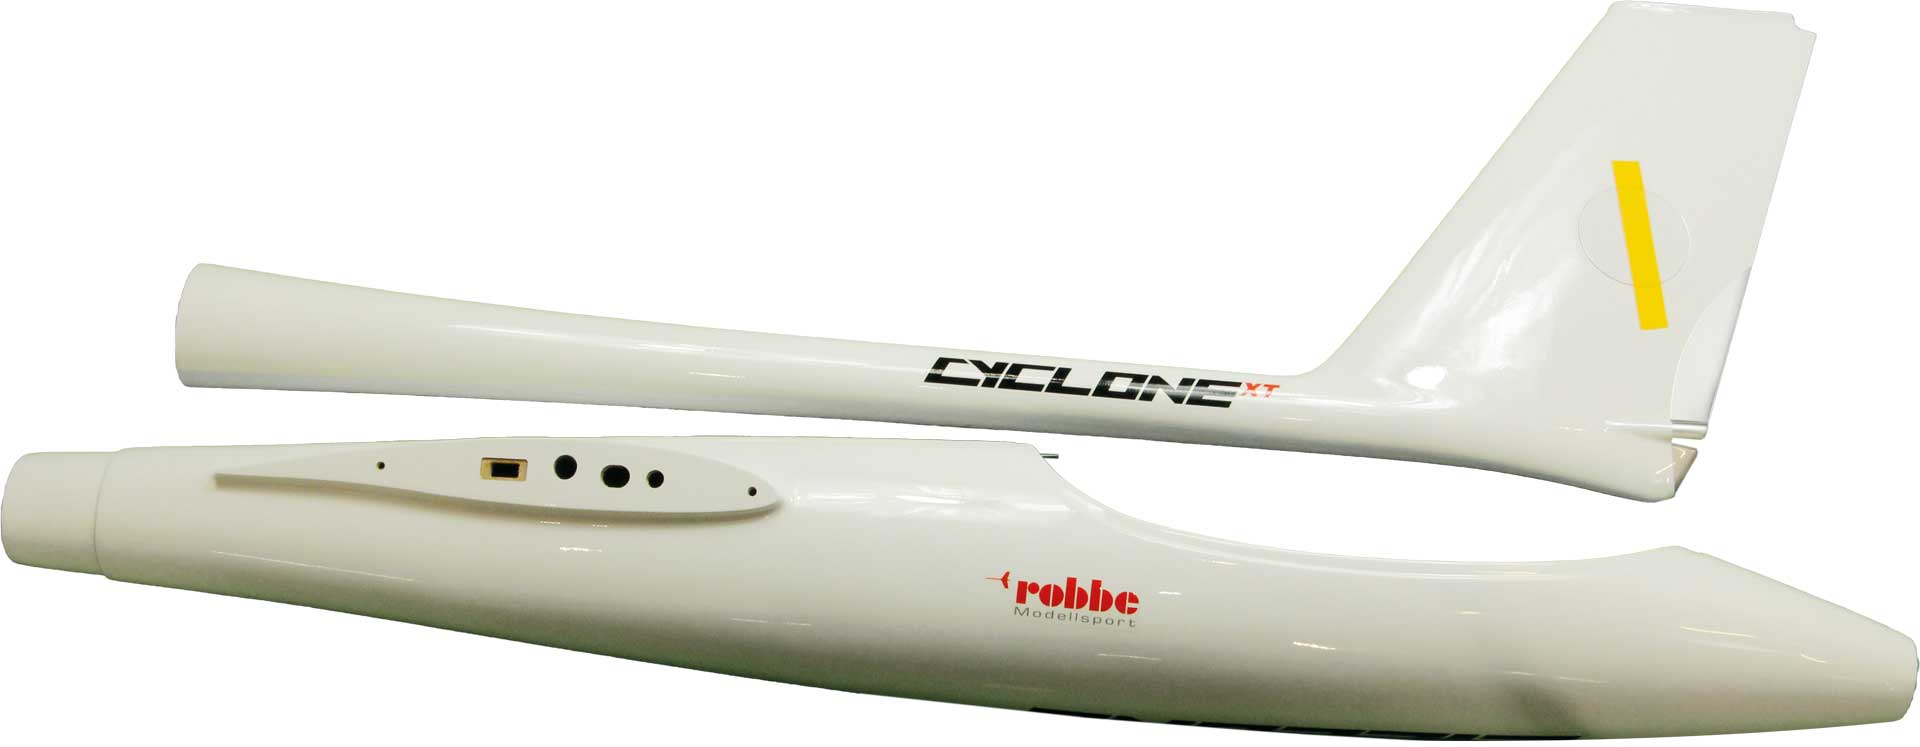 Robbe Modellsport FUSELAGE Cyclone XT ARF 6,2m SANS ELECTRONIQUE